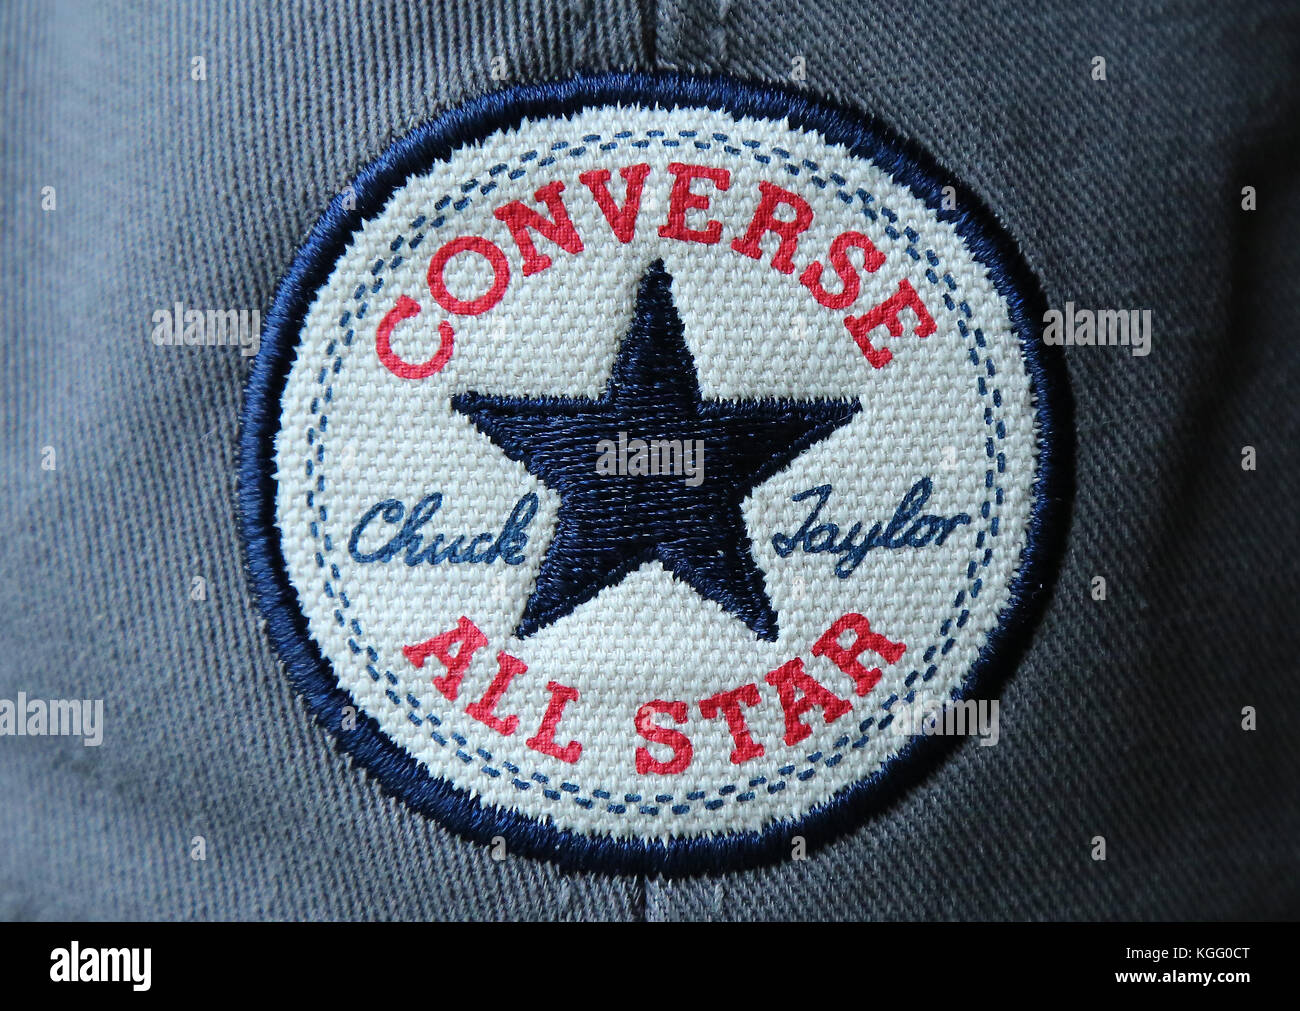 Converse Chuck Taylor all star baseball cap Badge brodé sur une casquette de baseball. Banque D'Images